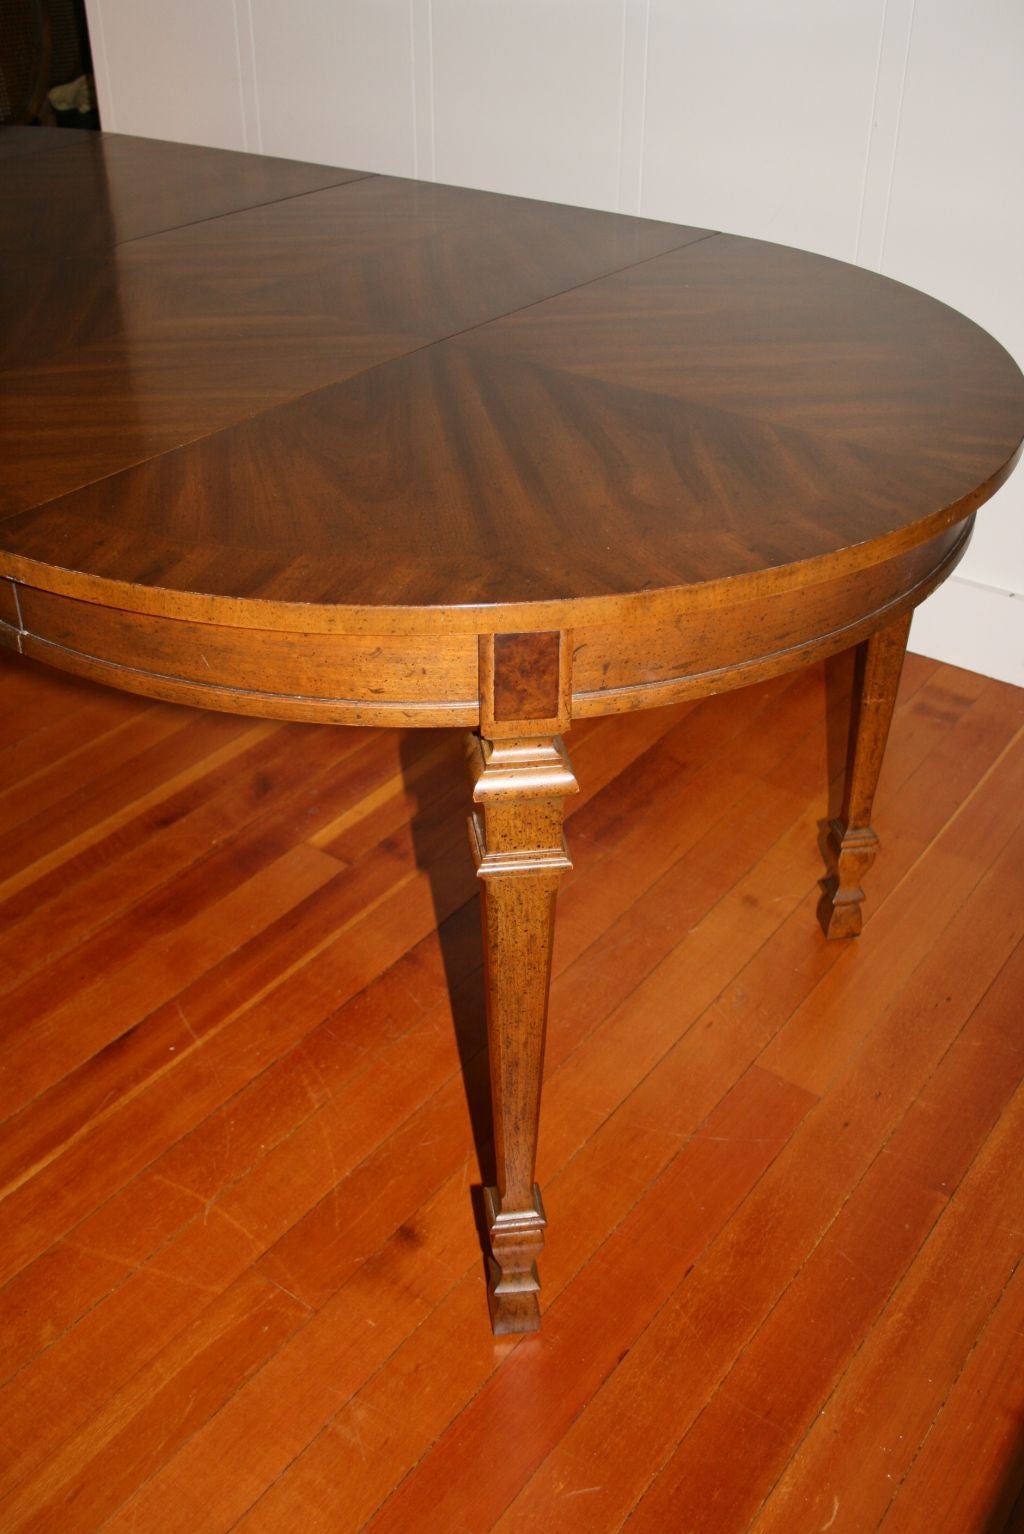 pecan wood table